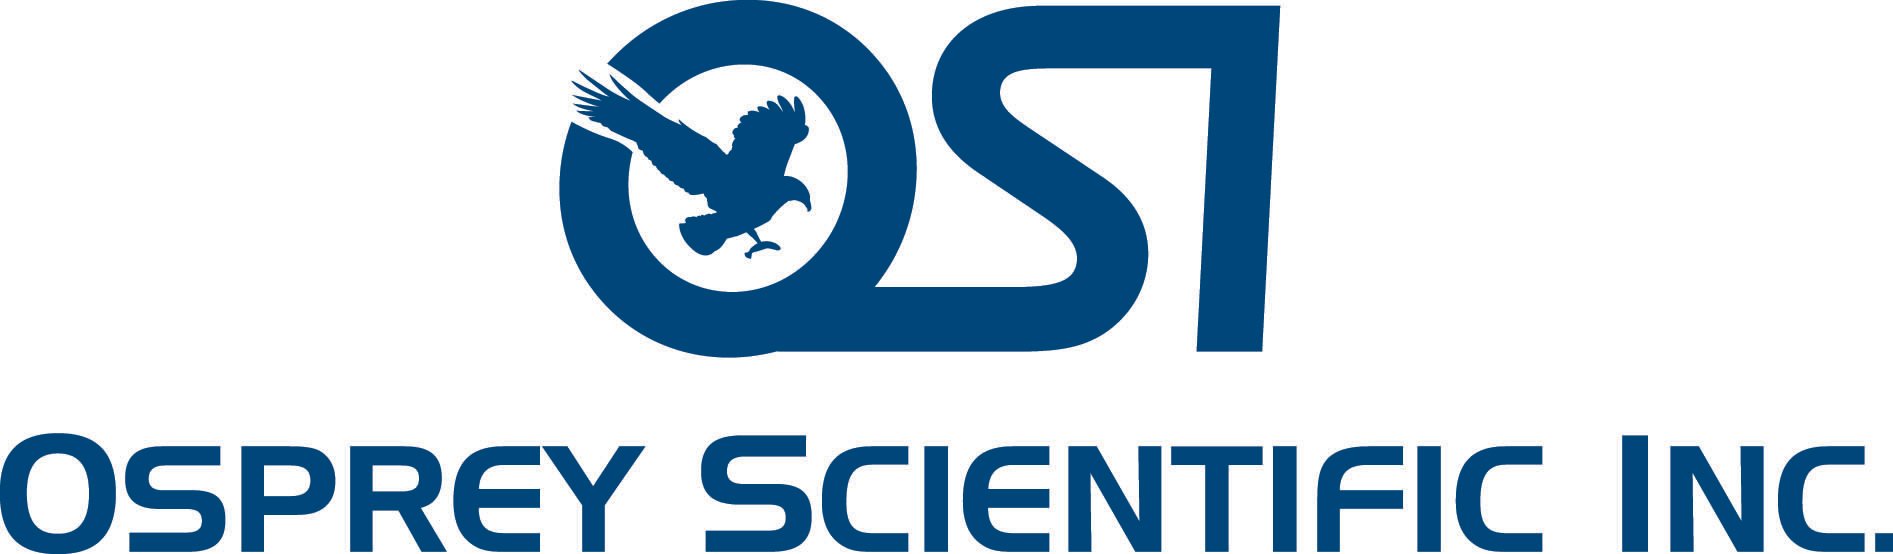 Osprey Scientific.jpg